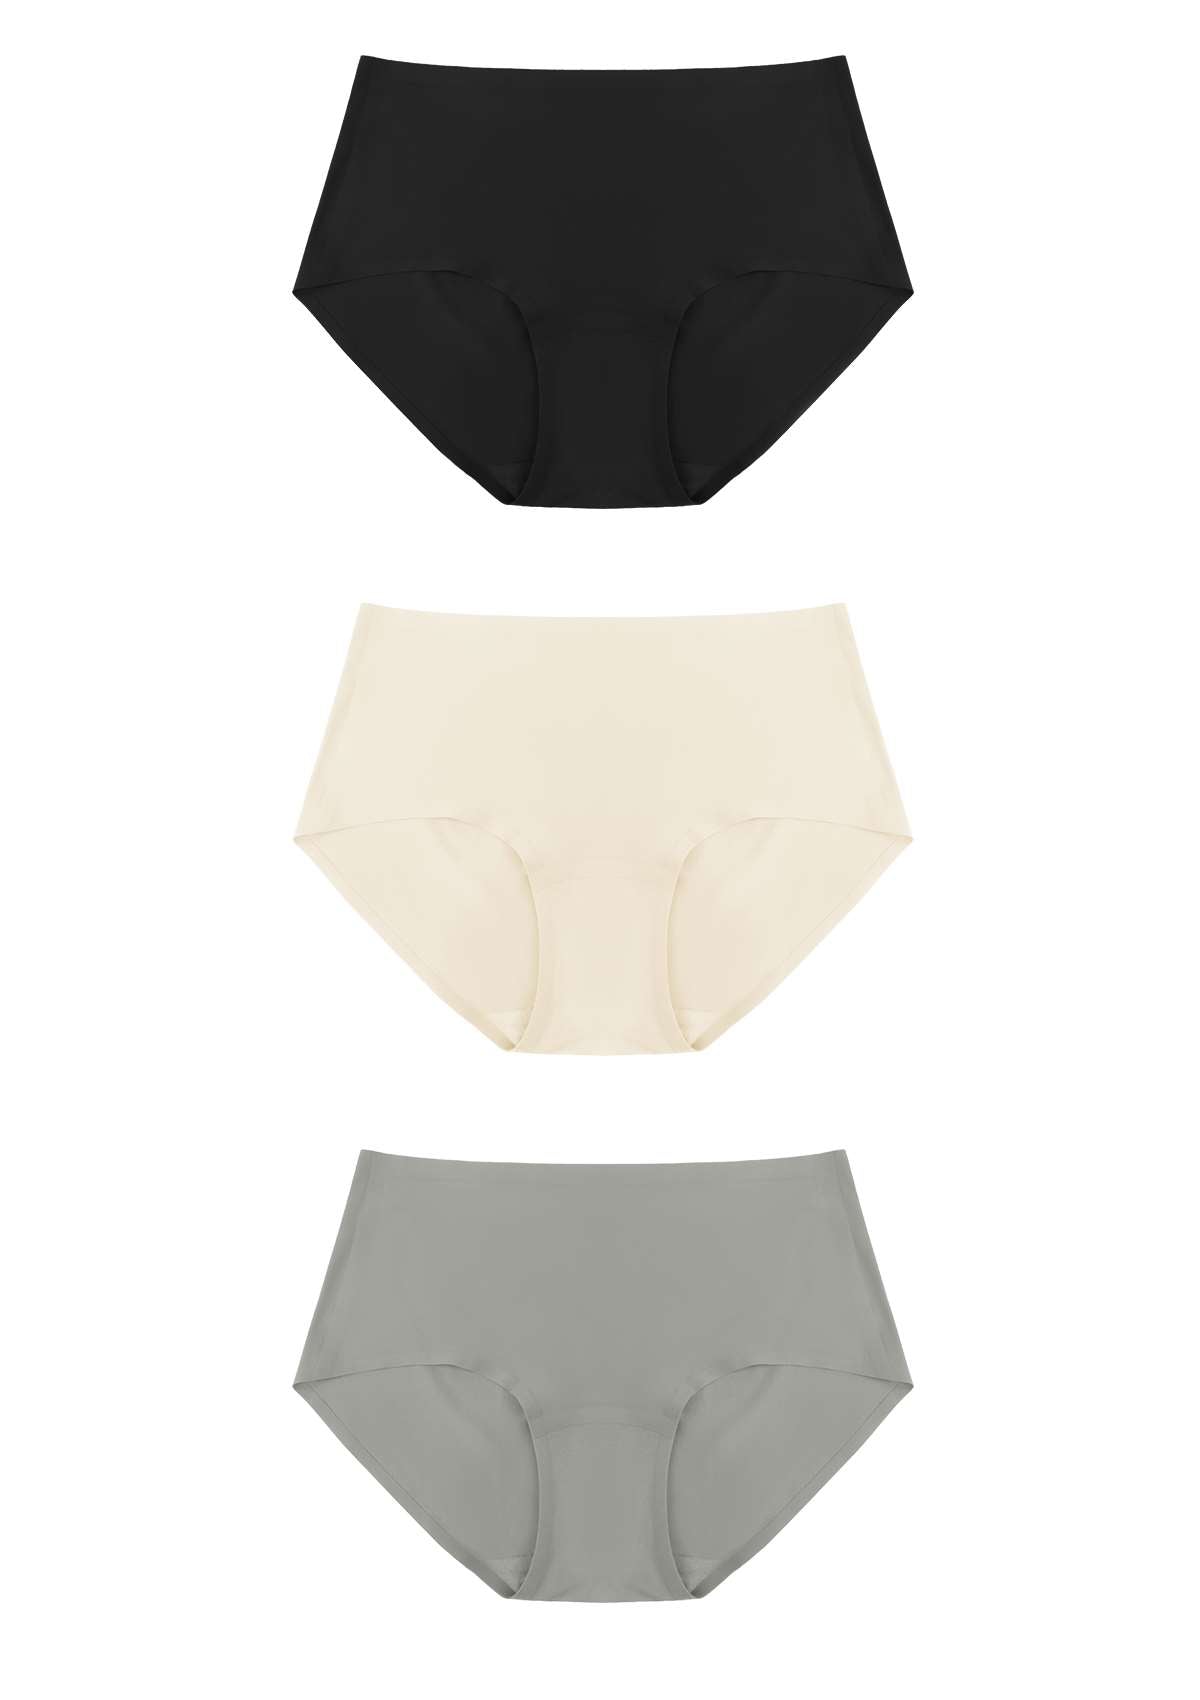 HSIA FlexiFit Soft Stretch Seamless Brief Underwear Bundle - 3 Packs/$15 / XS-L / Black+Peach Beige+Gray